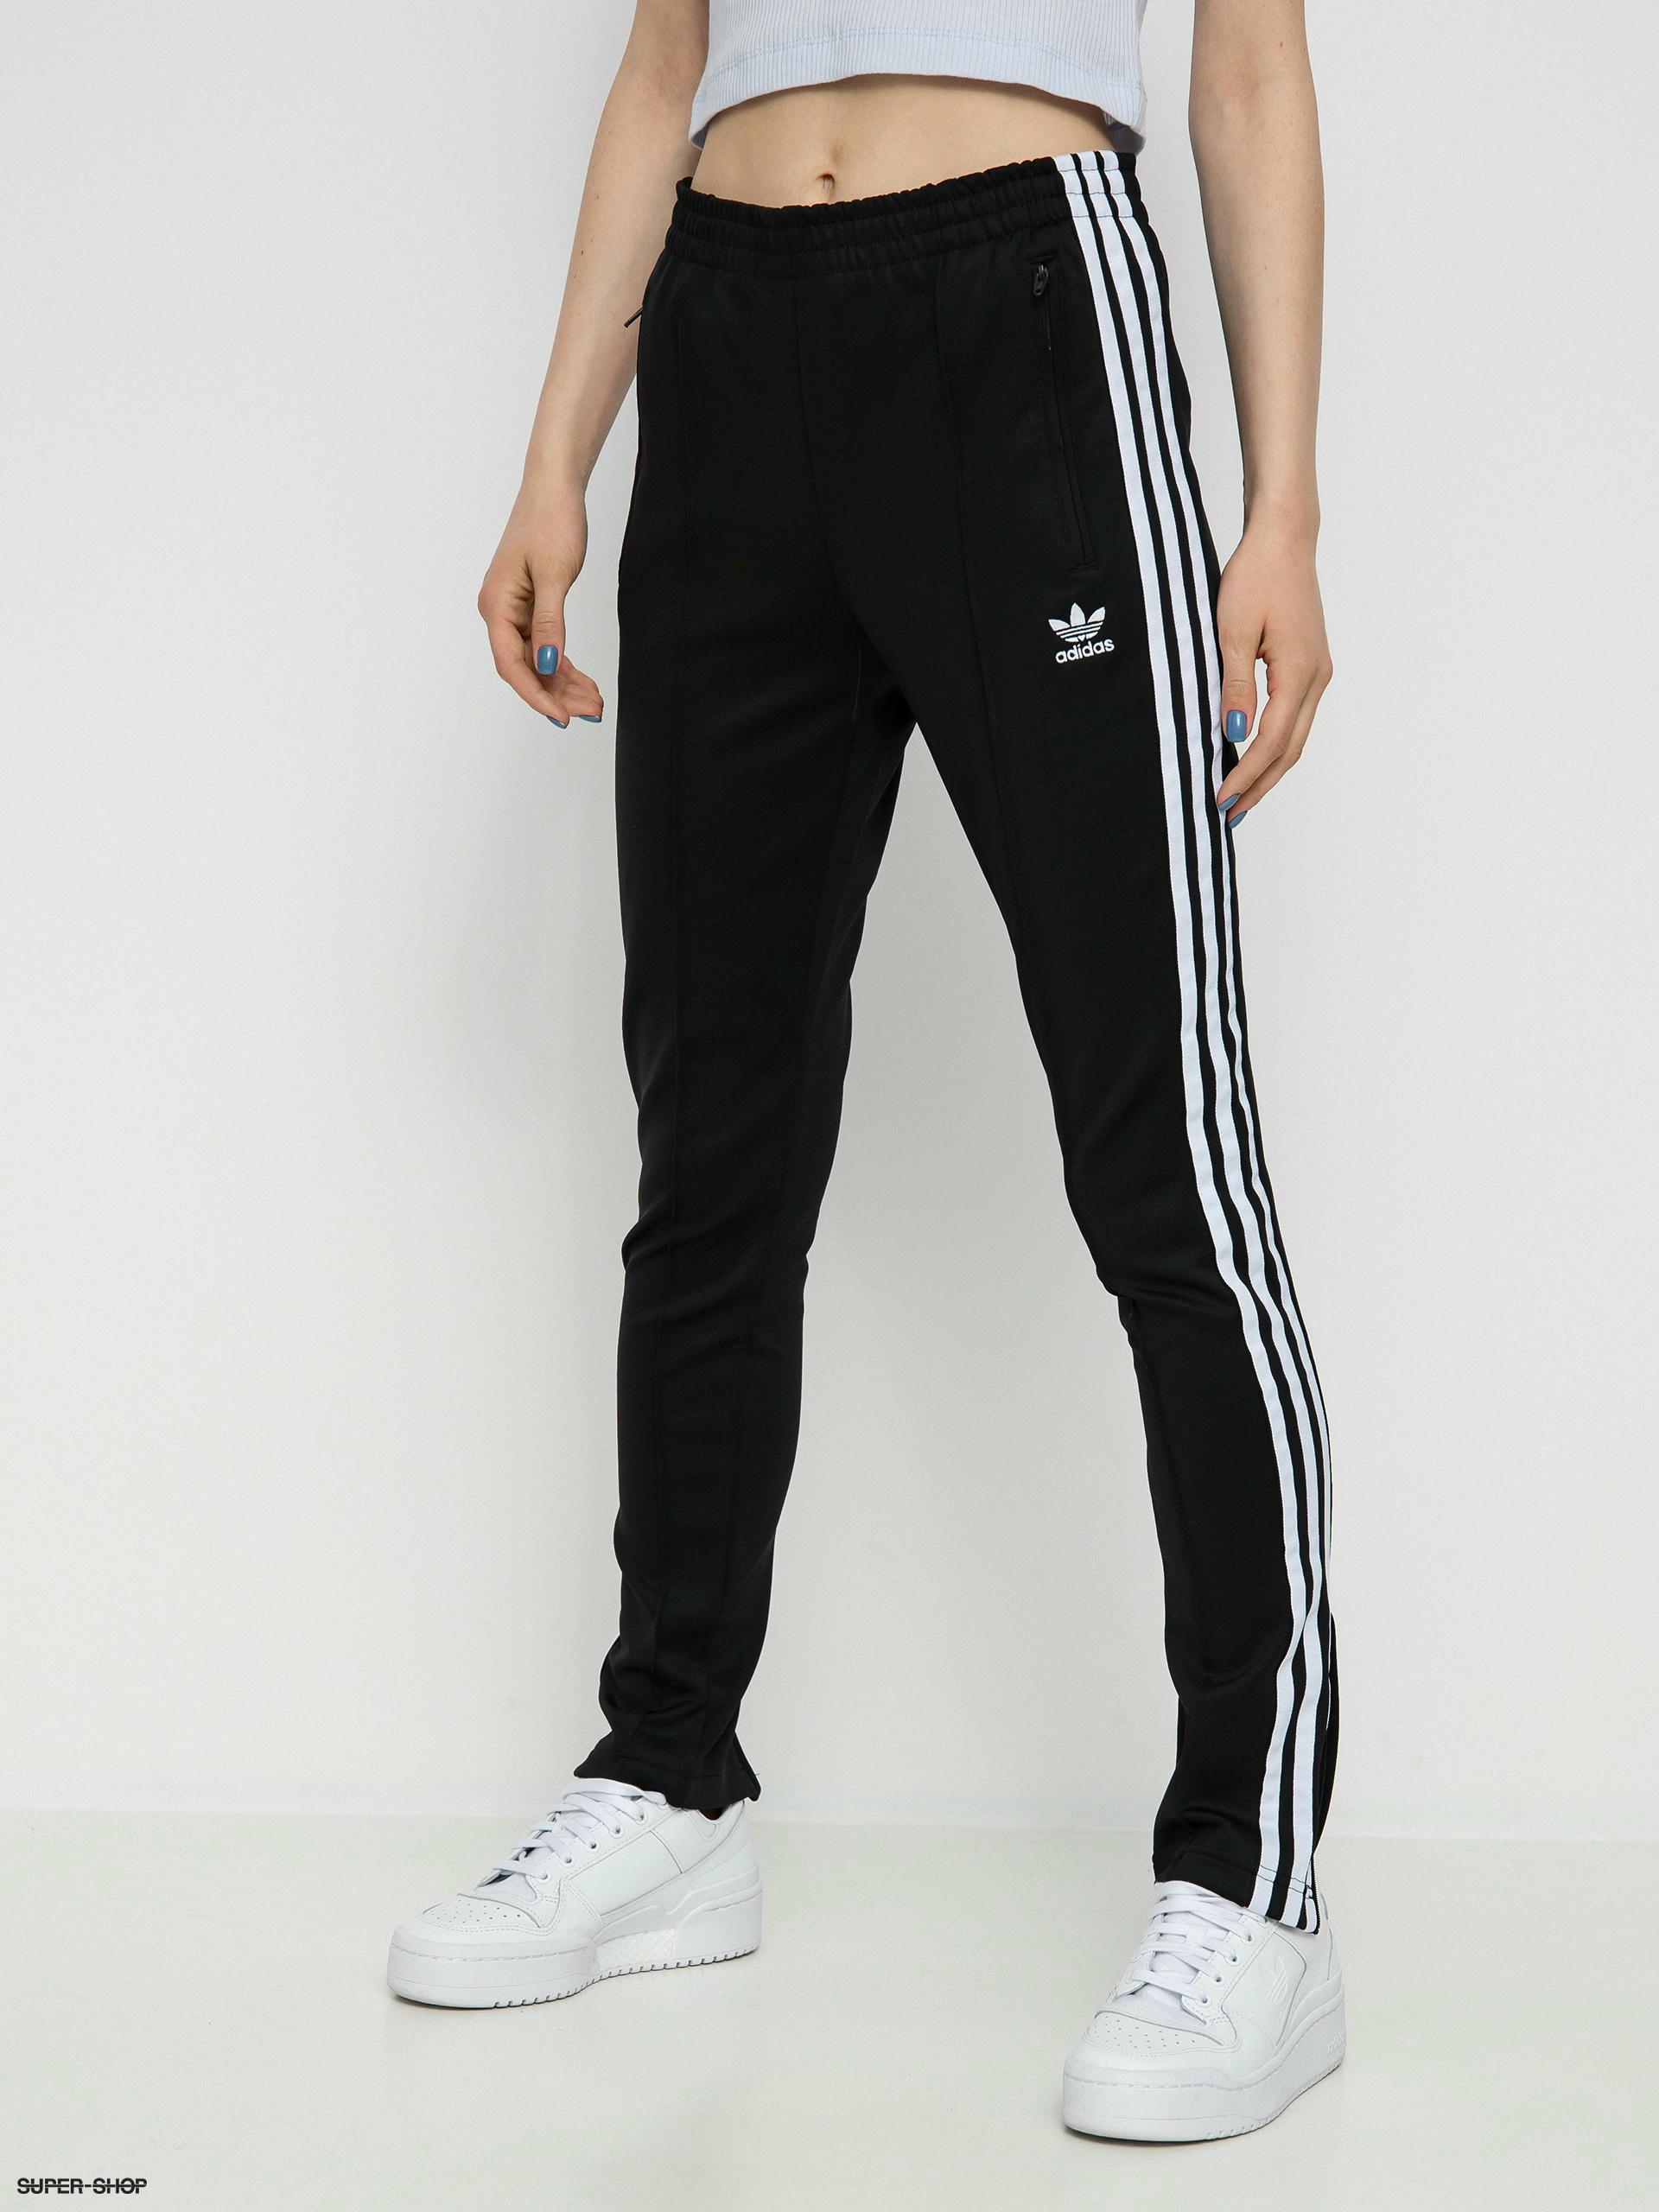 adidas Originals Sst Pants Pb (black/white) Wmn Pants